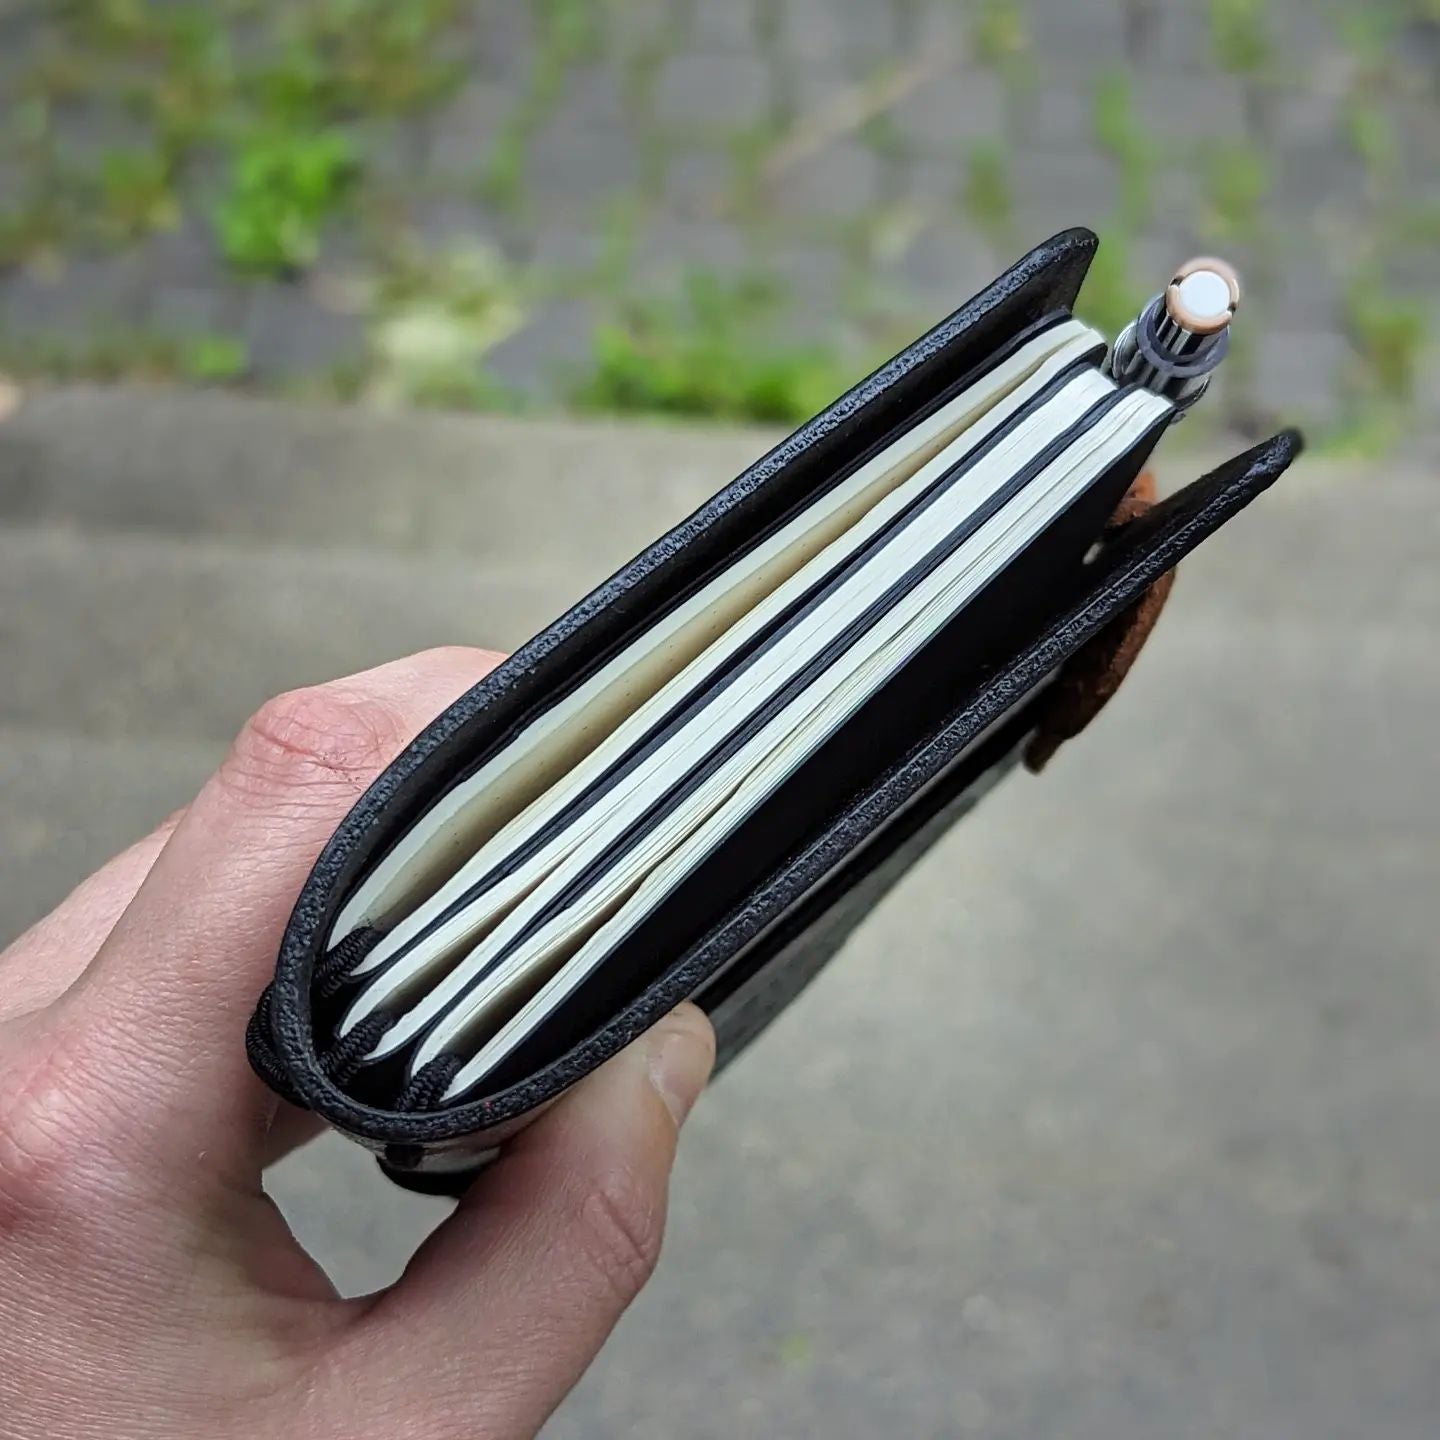 Pocket Size Traveller's Refillable Notebook | Pyrography Dandelions